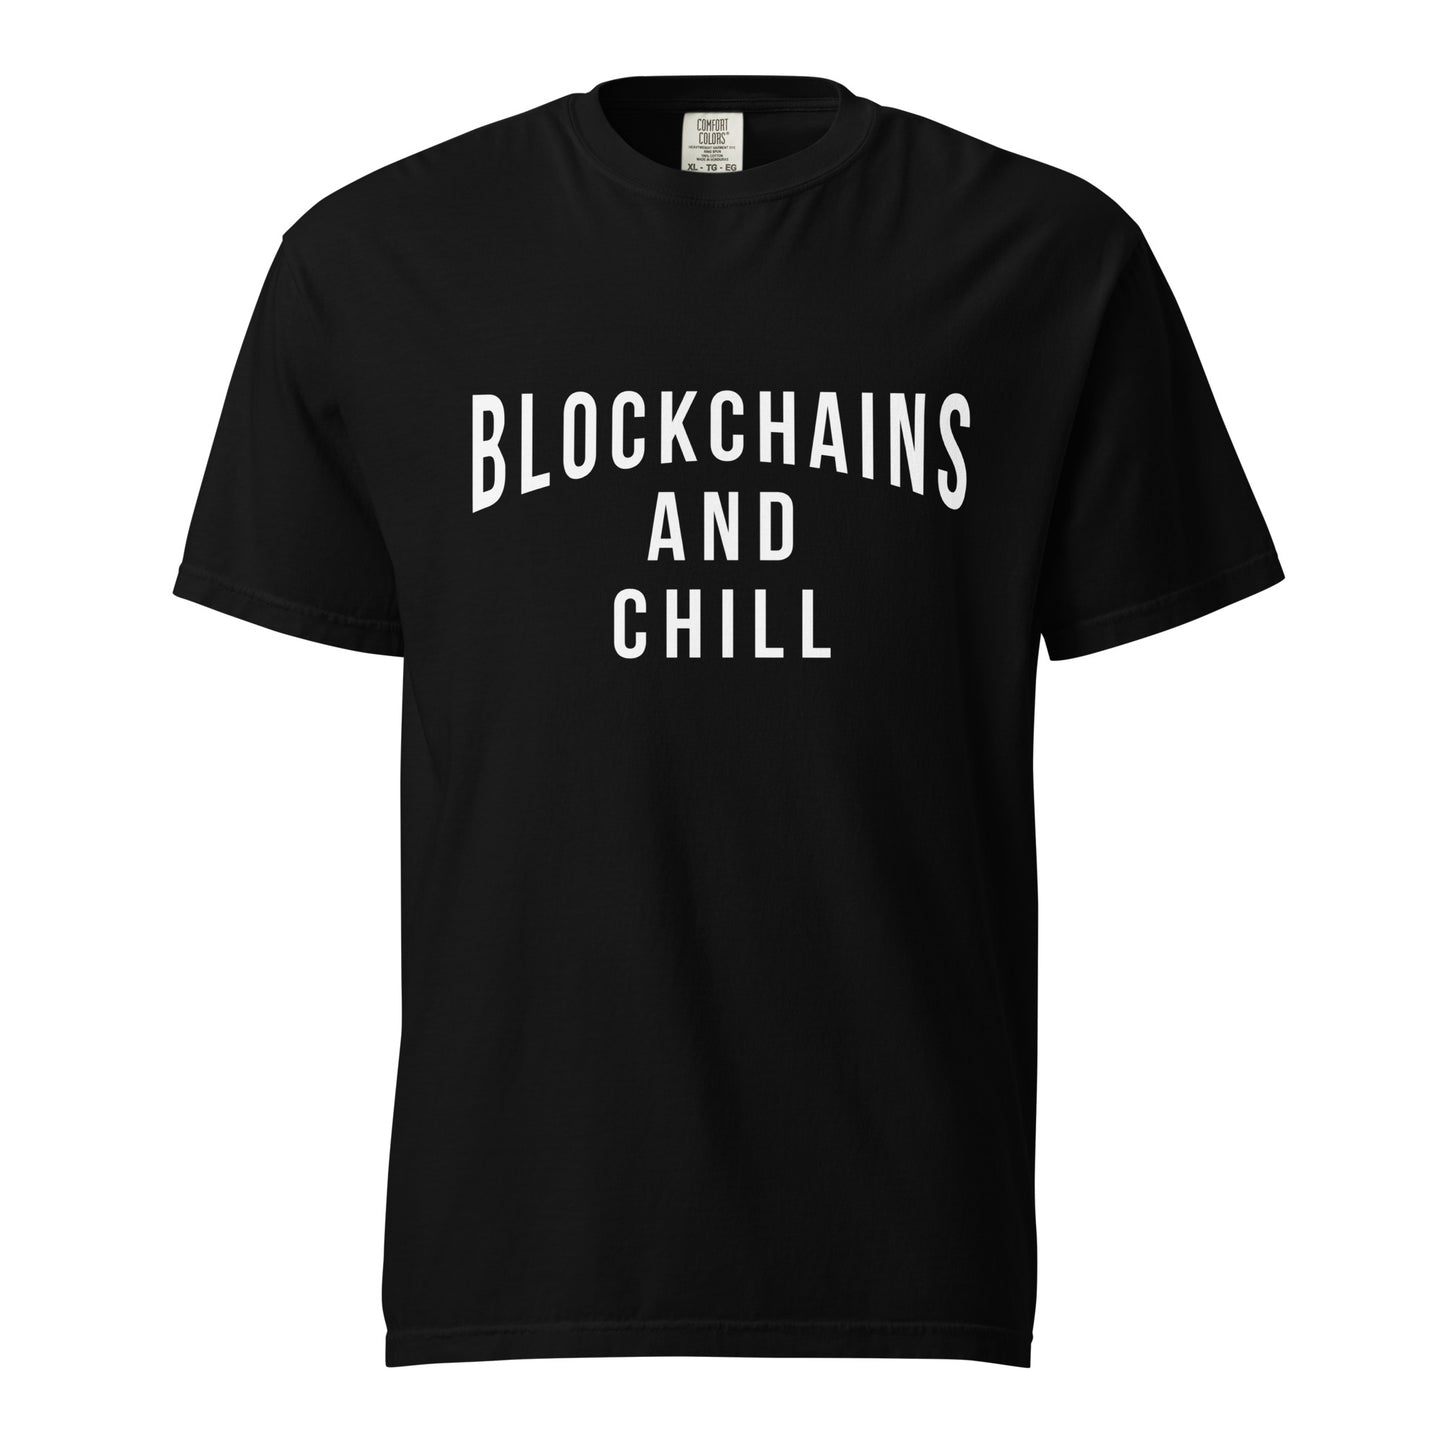 Blockchains and chill heavyweight t-shirt